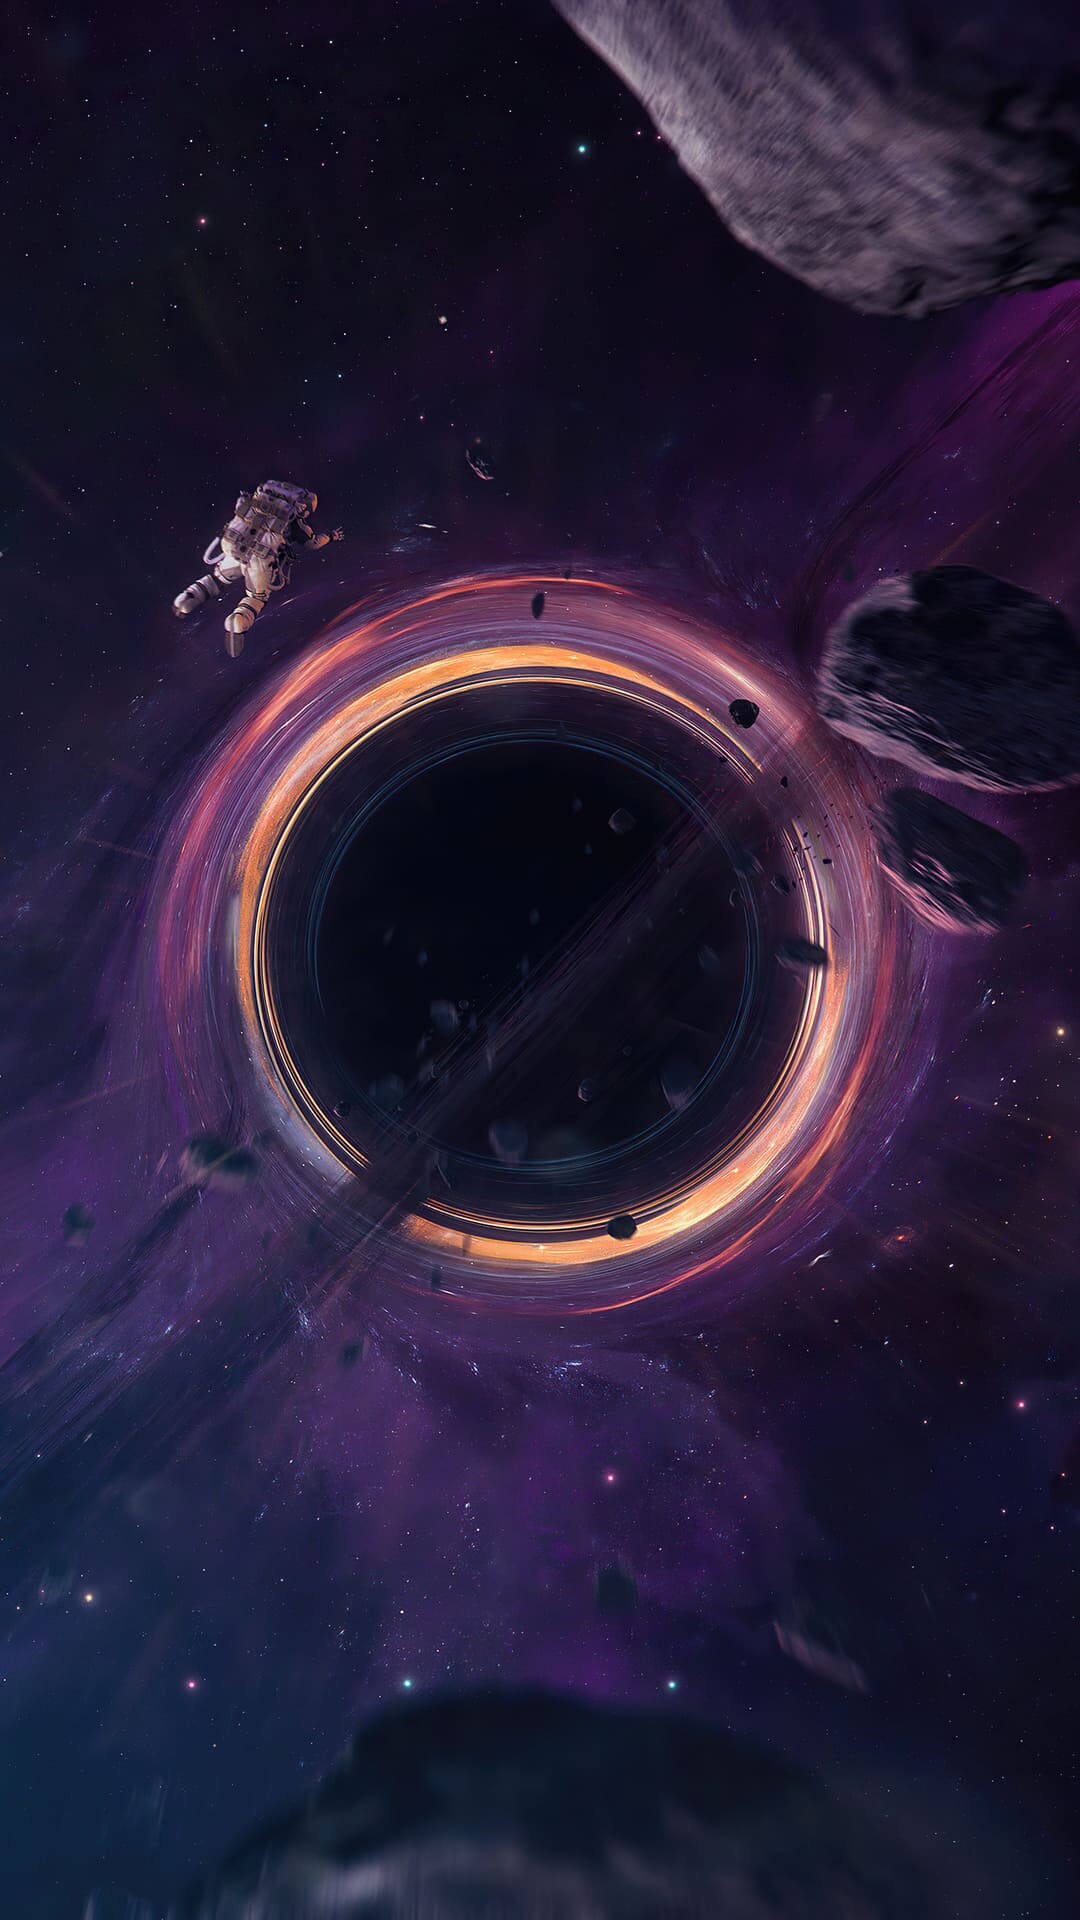 Astronaut: Interstellar, Black hole, Spacesuit, Spacewalking, Science. 1080x1920 Full HD Wallpaper.